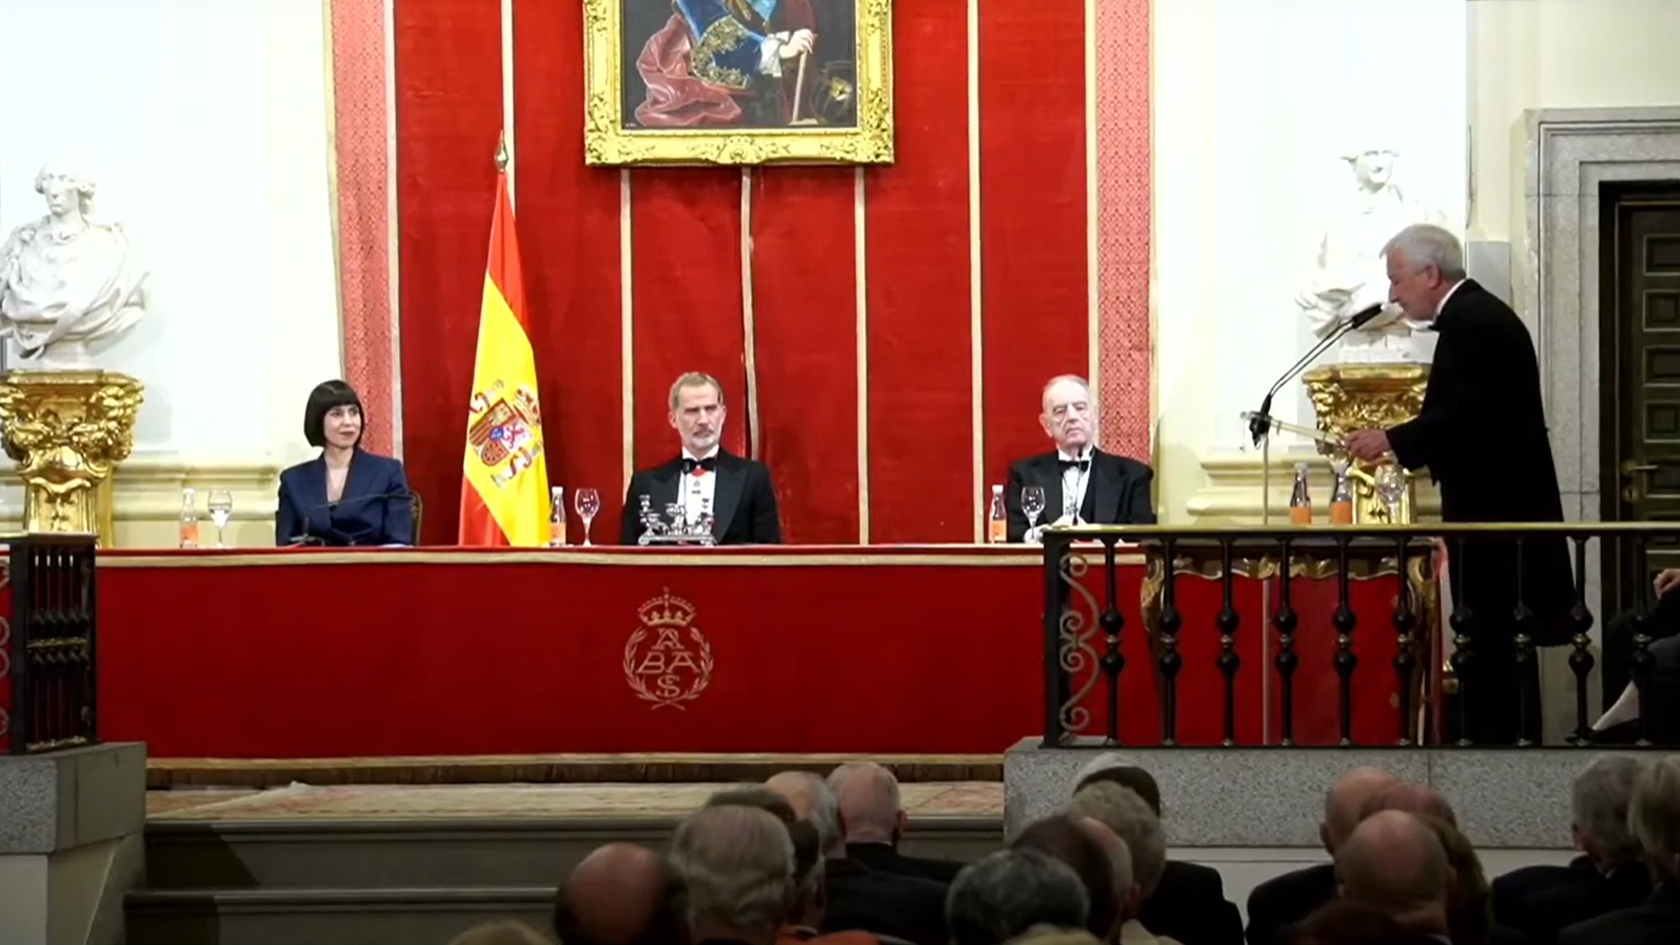 Opening of Spanish Royal Academies year